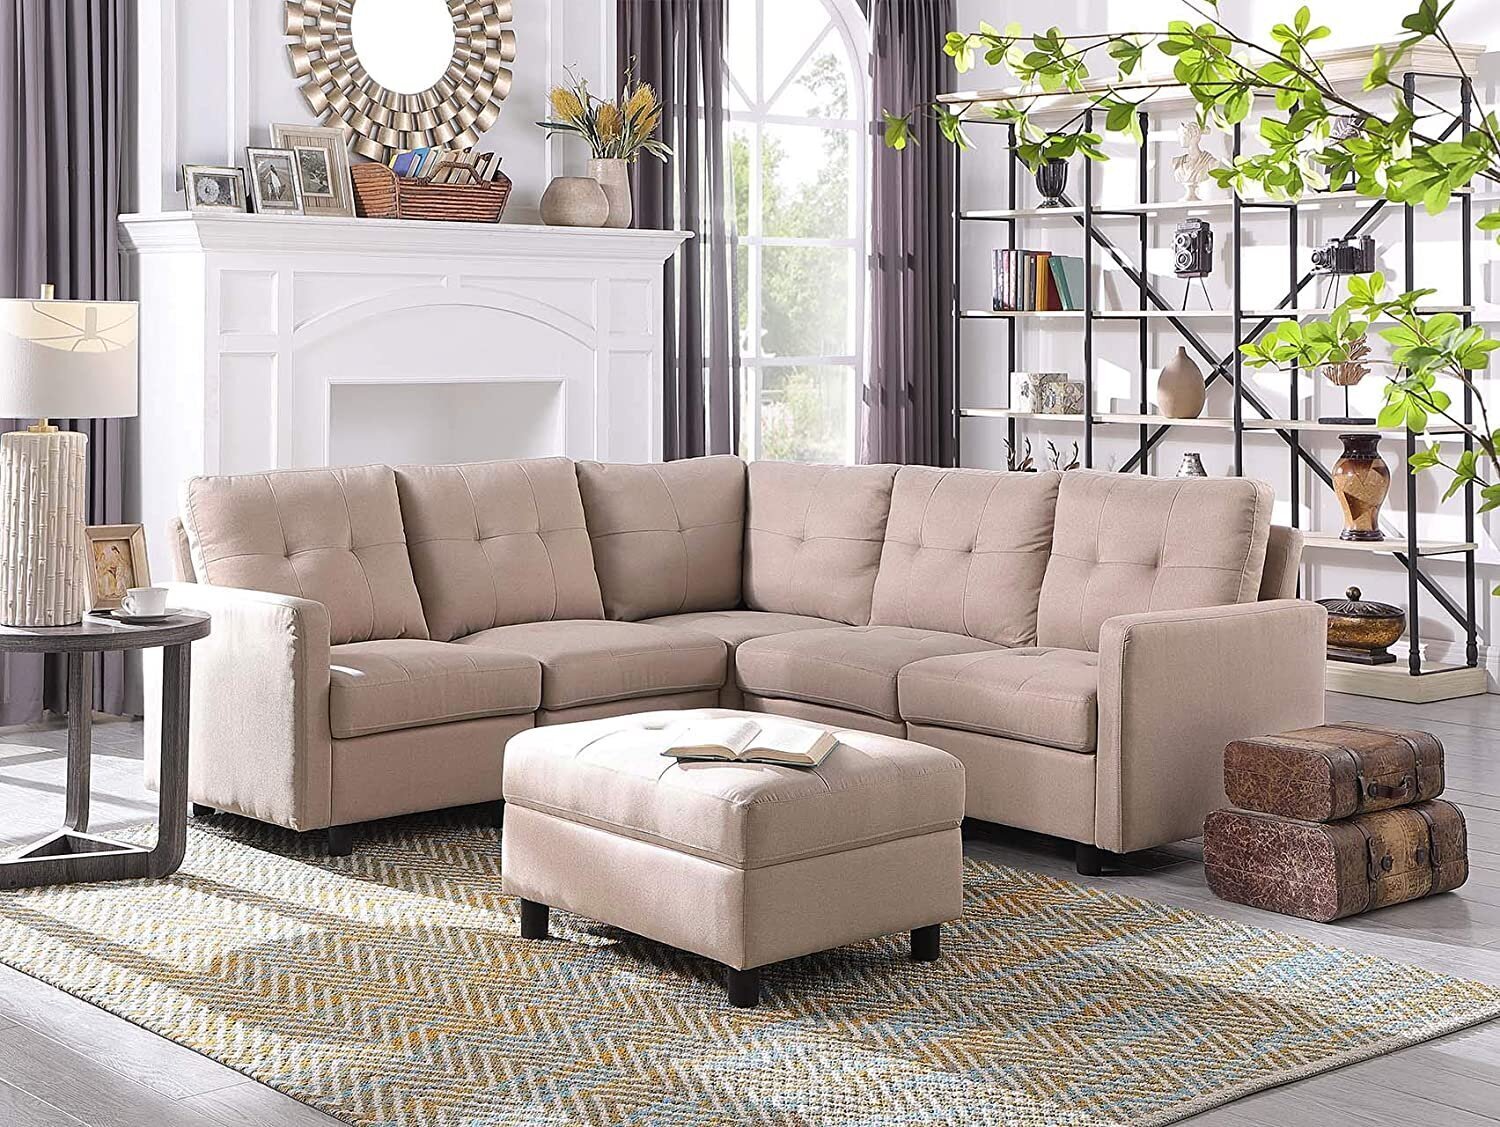 Soft, Symmetrical Sofa With Ottoman